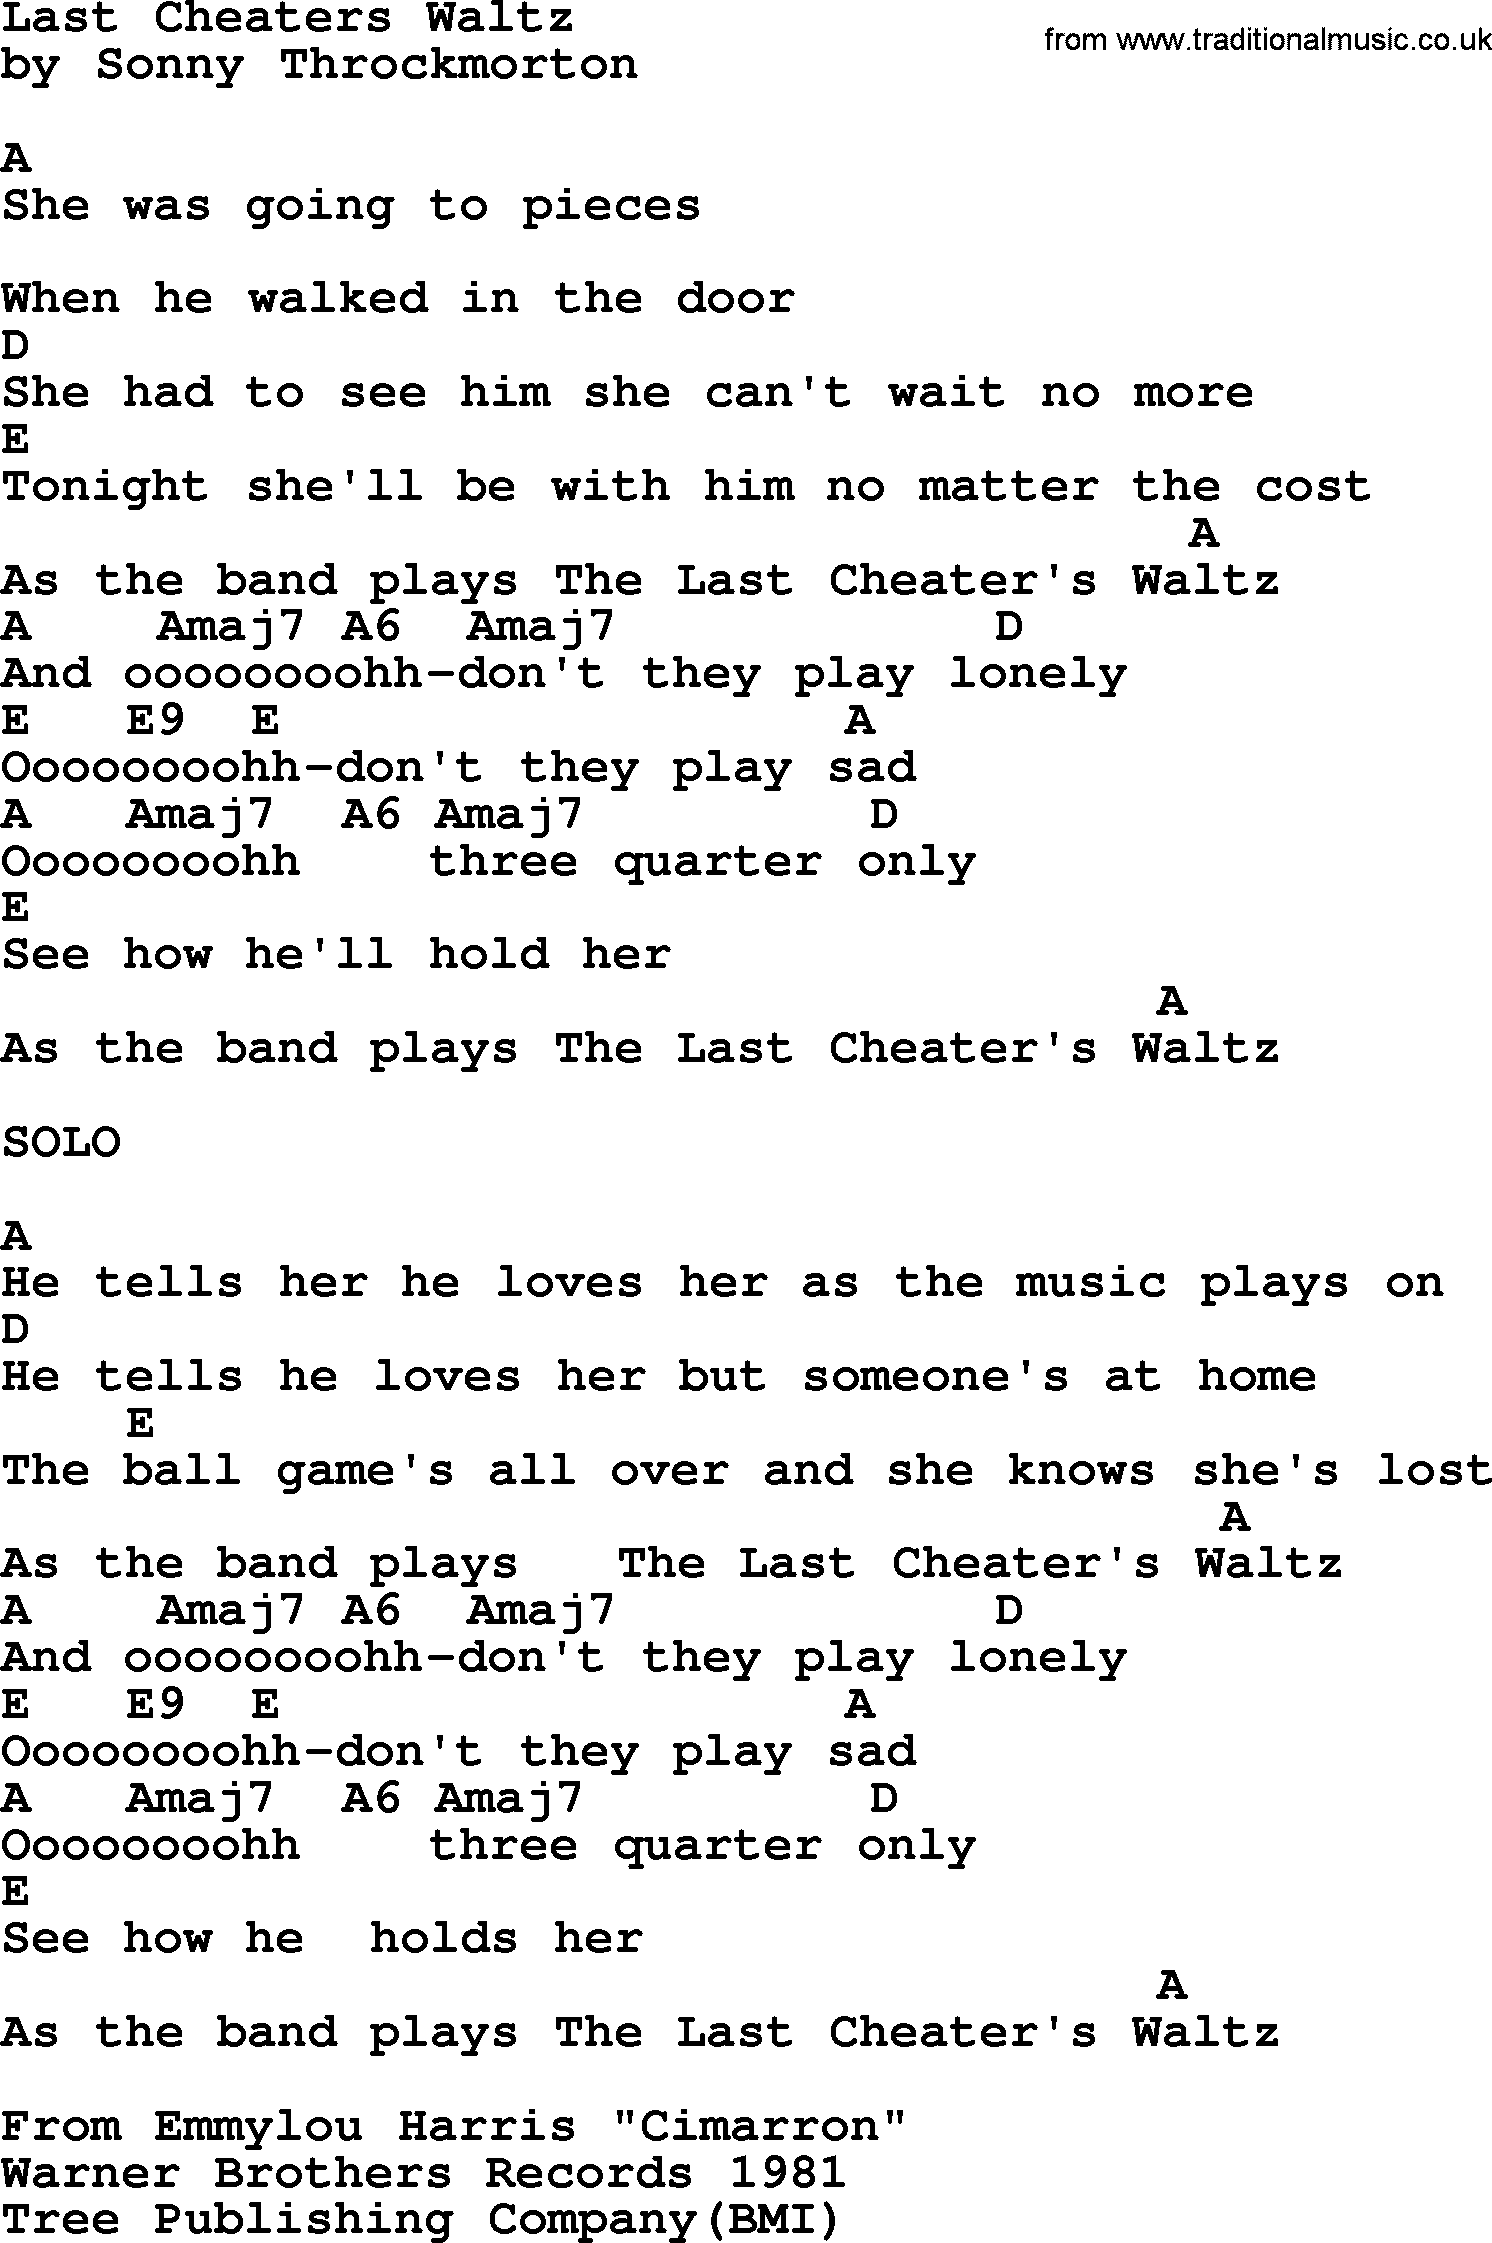 Emmylou Harris song: Last Cheaters Waltz lyrics and chords